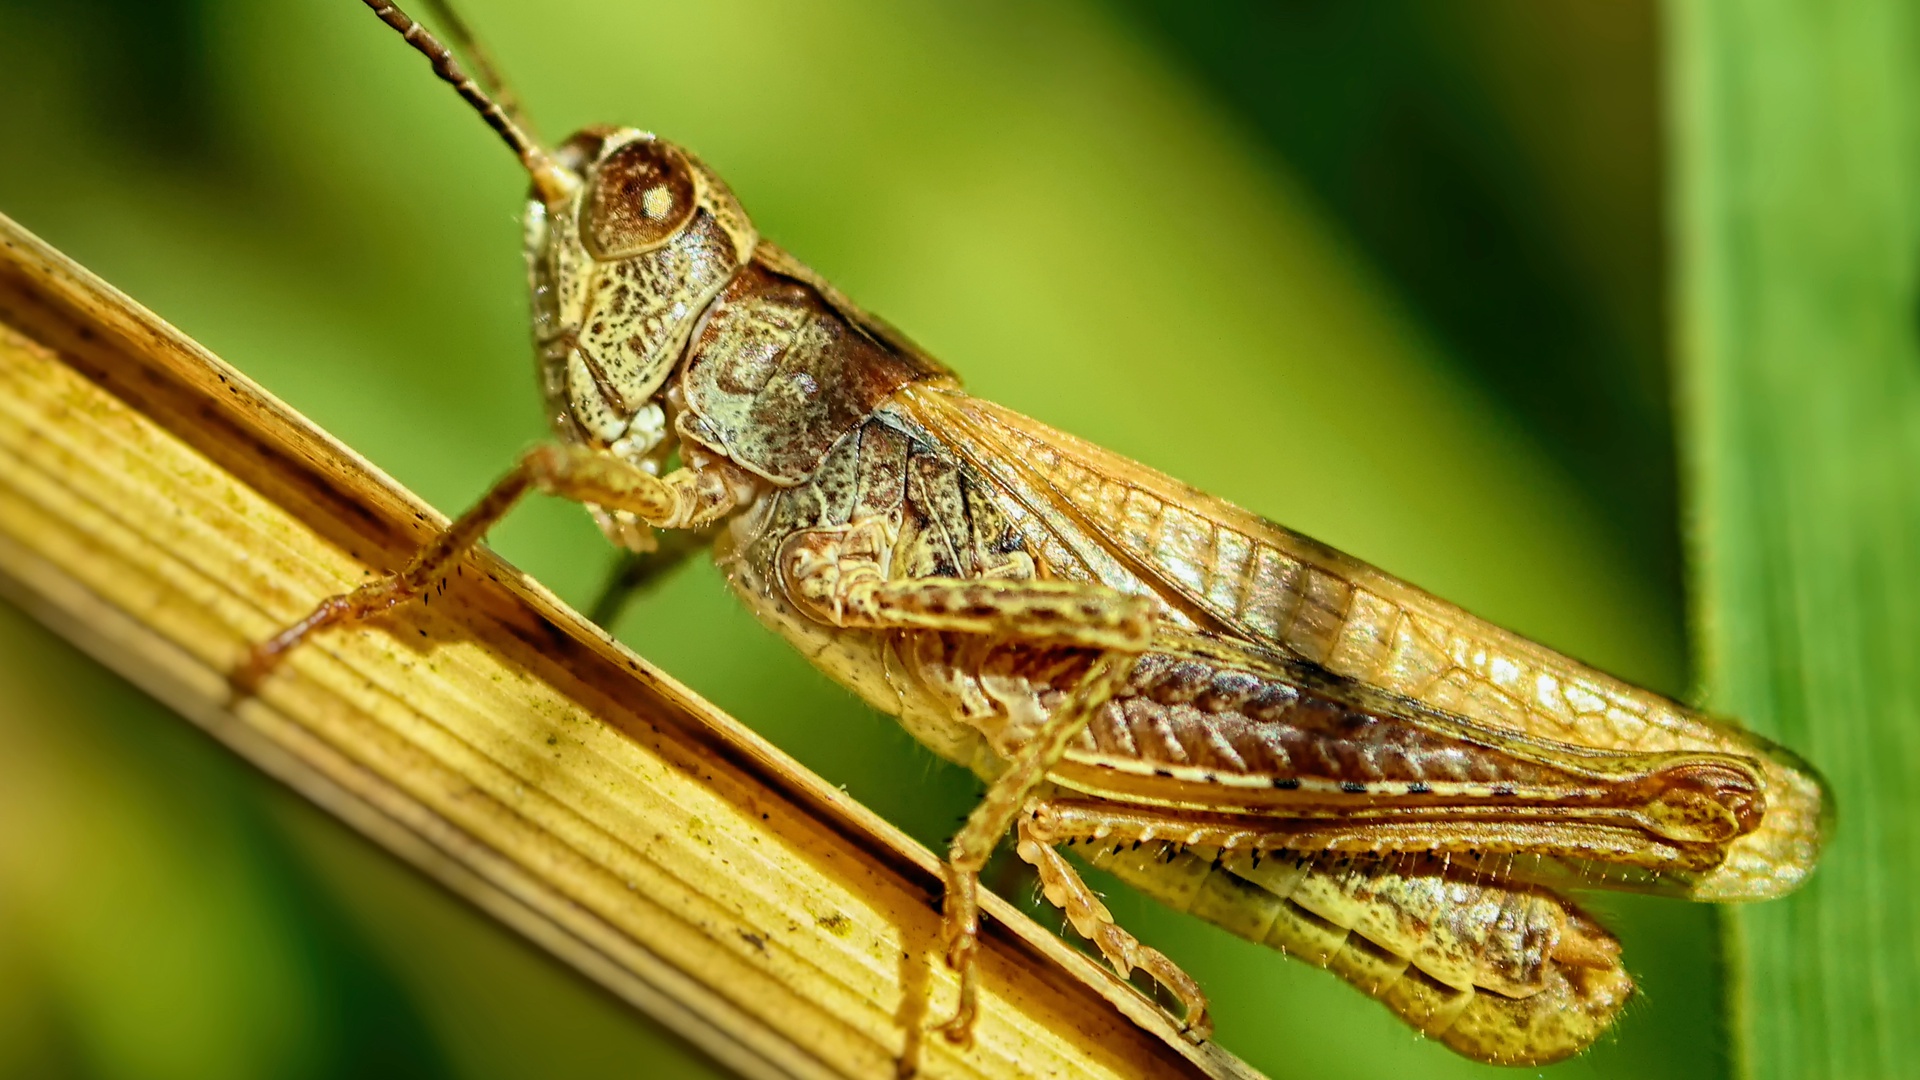 General 1920x1080 grasshopper grass nature macro closeup insect